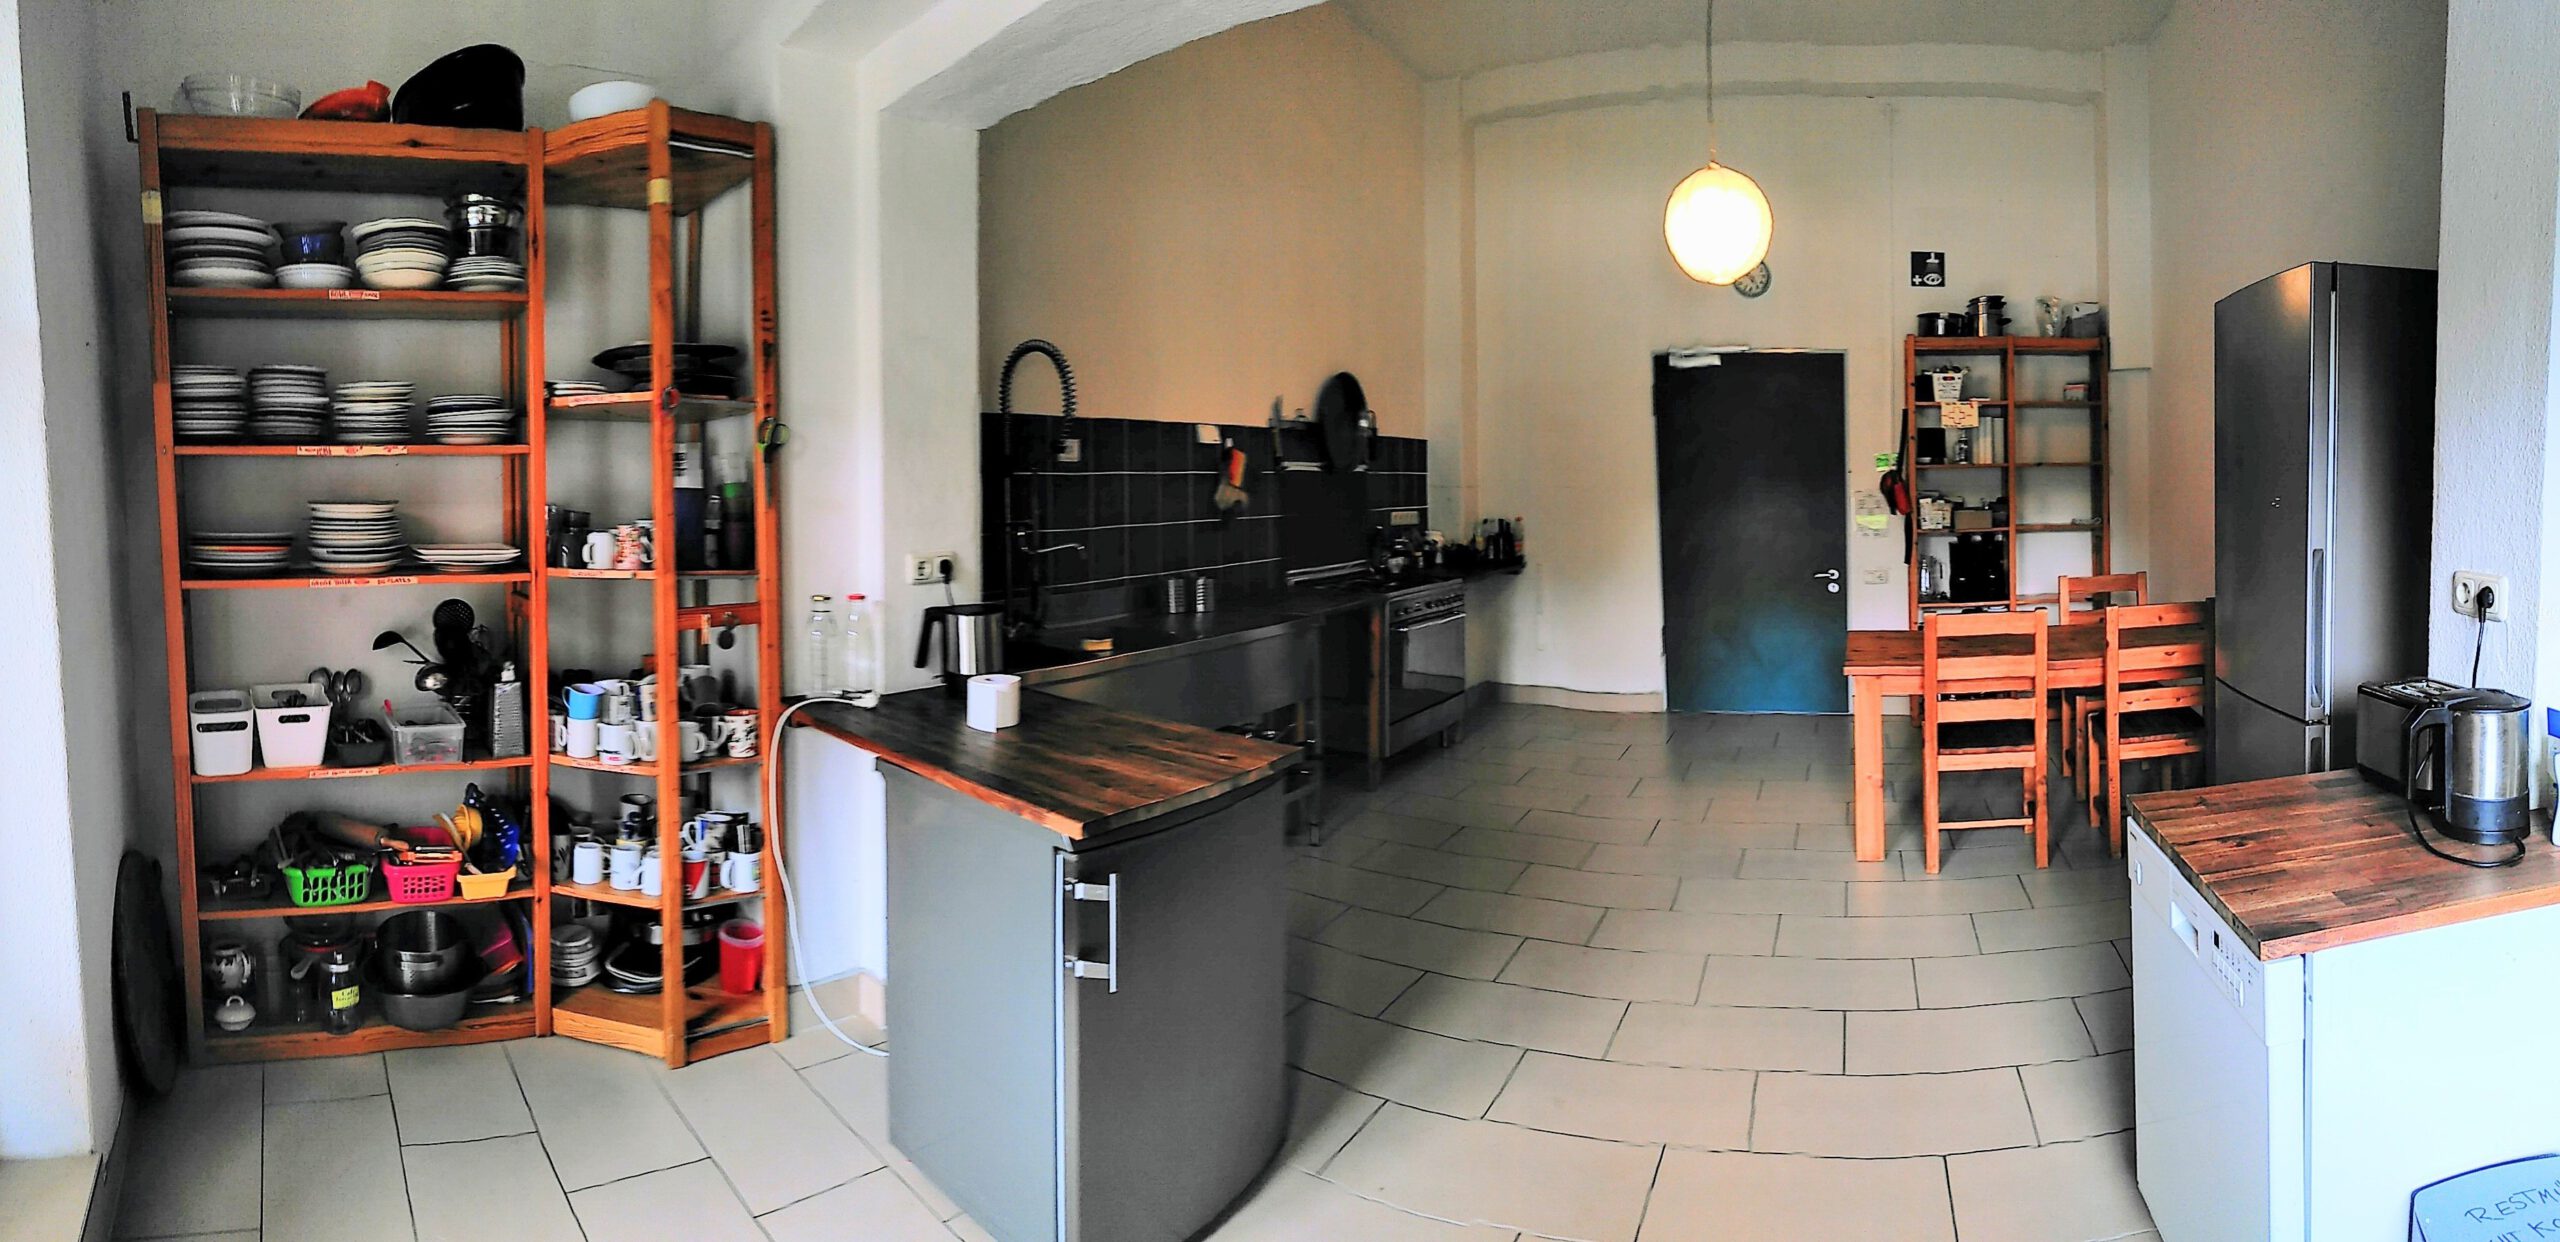 Seminarhouse kitchen with fridge and furniture